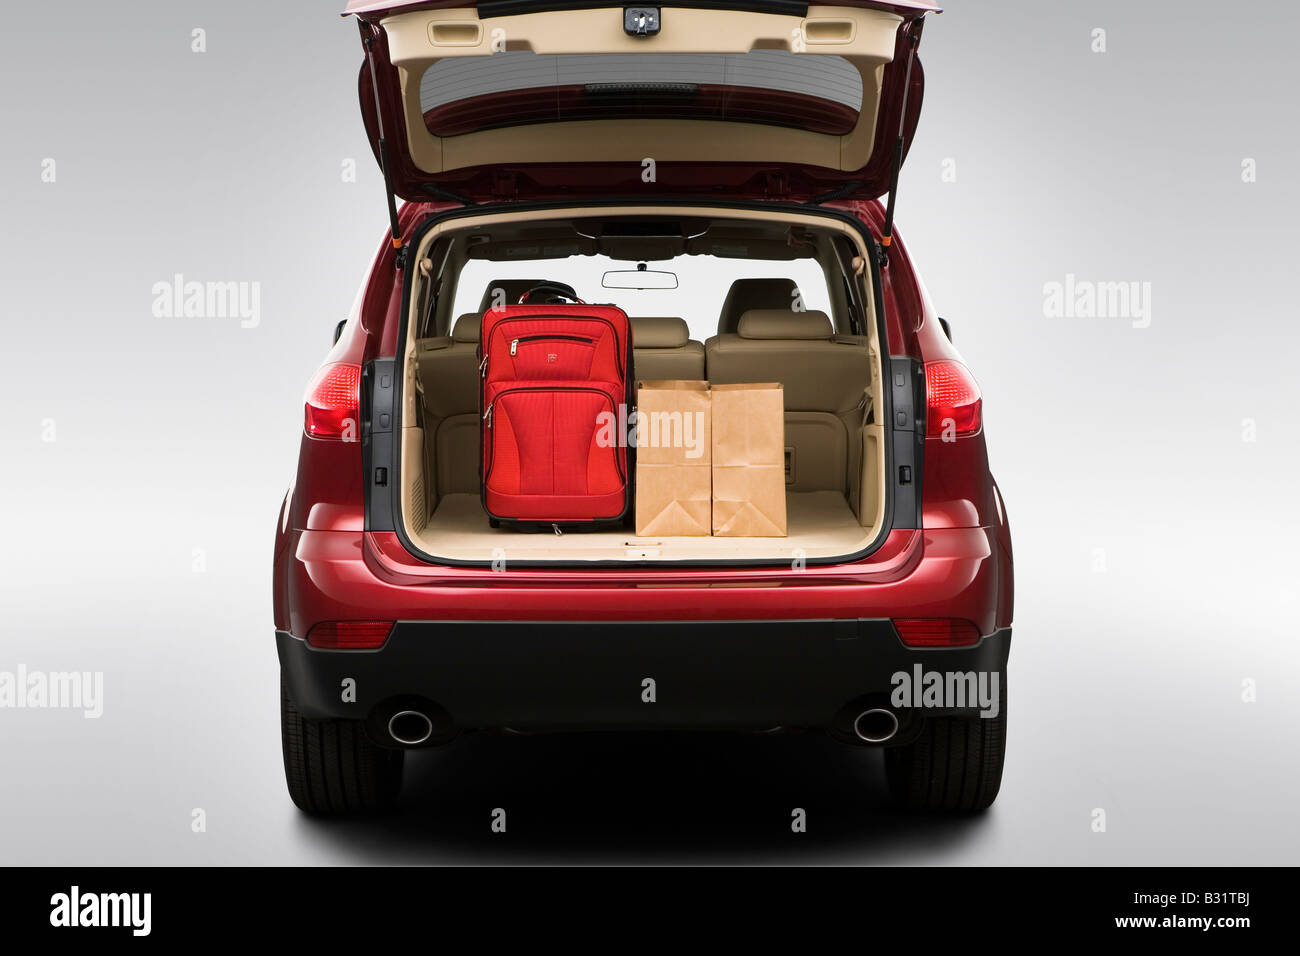 2009 Subaru Tribeca Limited in rot - Stamm Requisiten Stockfoto